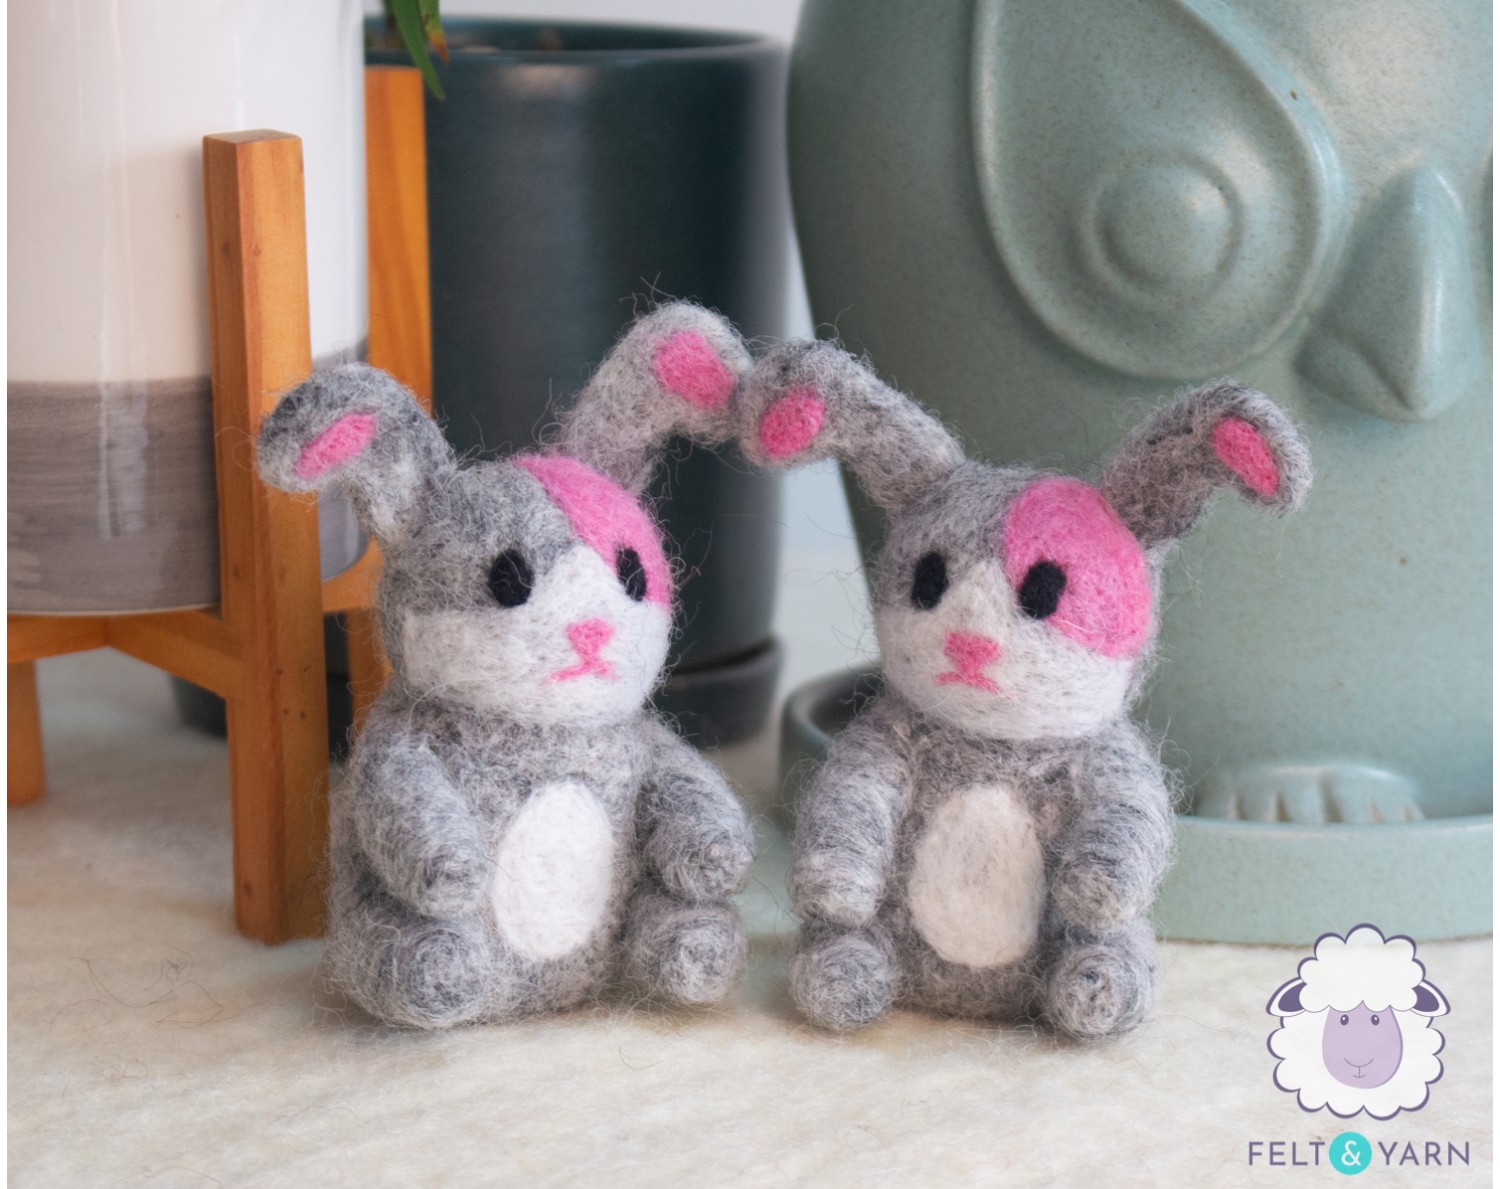 Cute Needle Felted Wool Bunny- Felt and Yarn